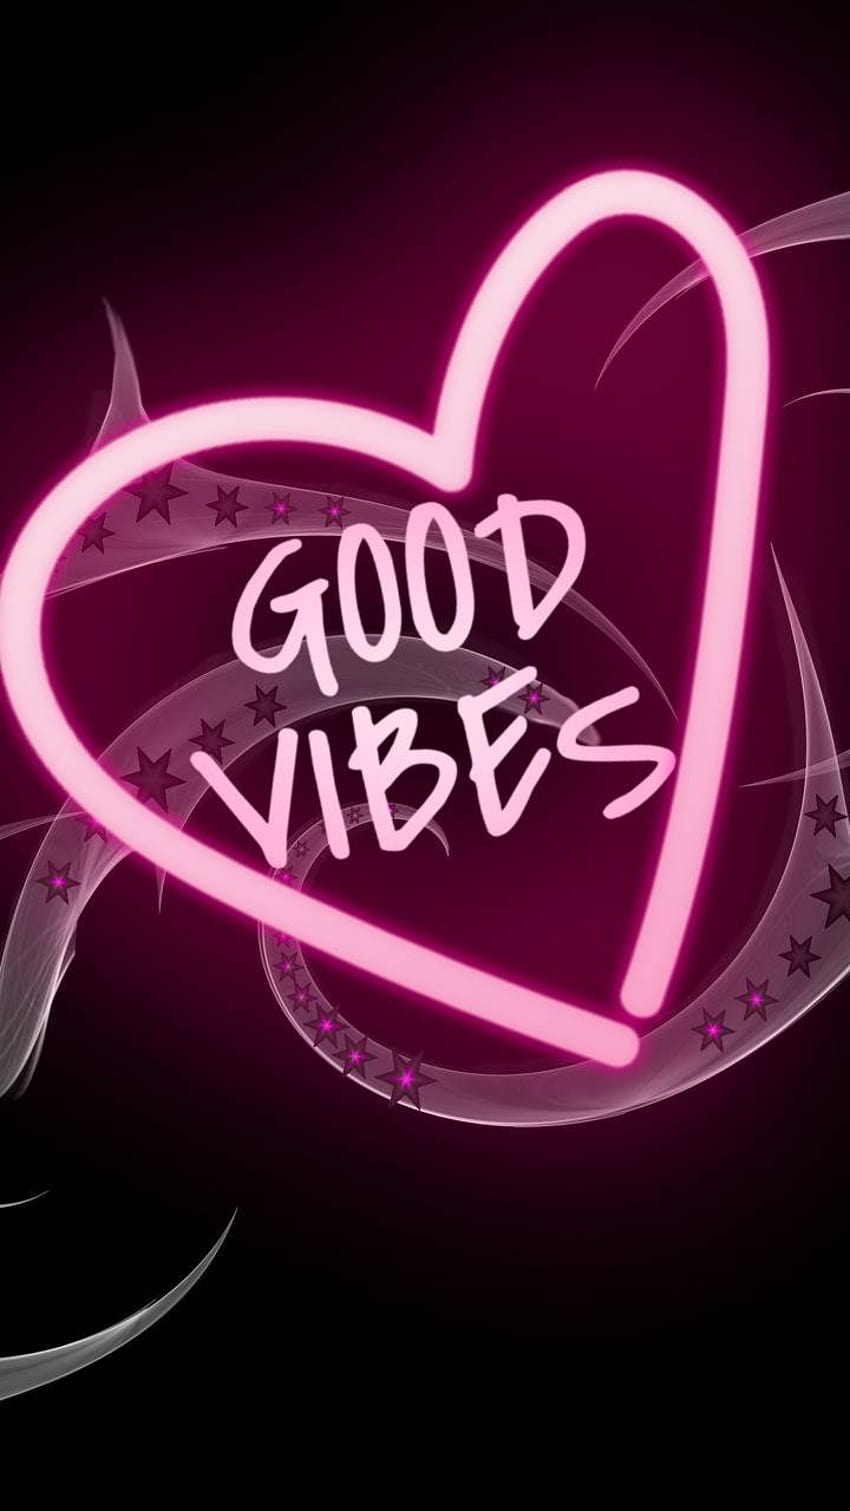 Good Vibes by Isisvamp1078, music vibes HD phone wallpaper